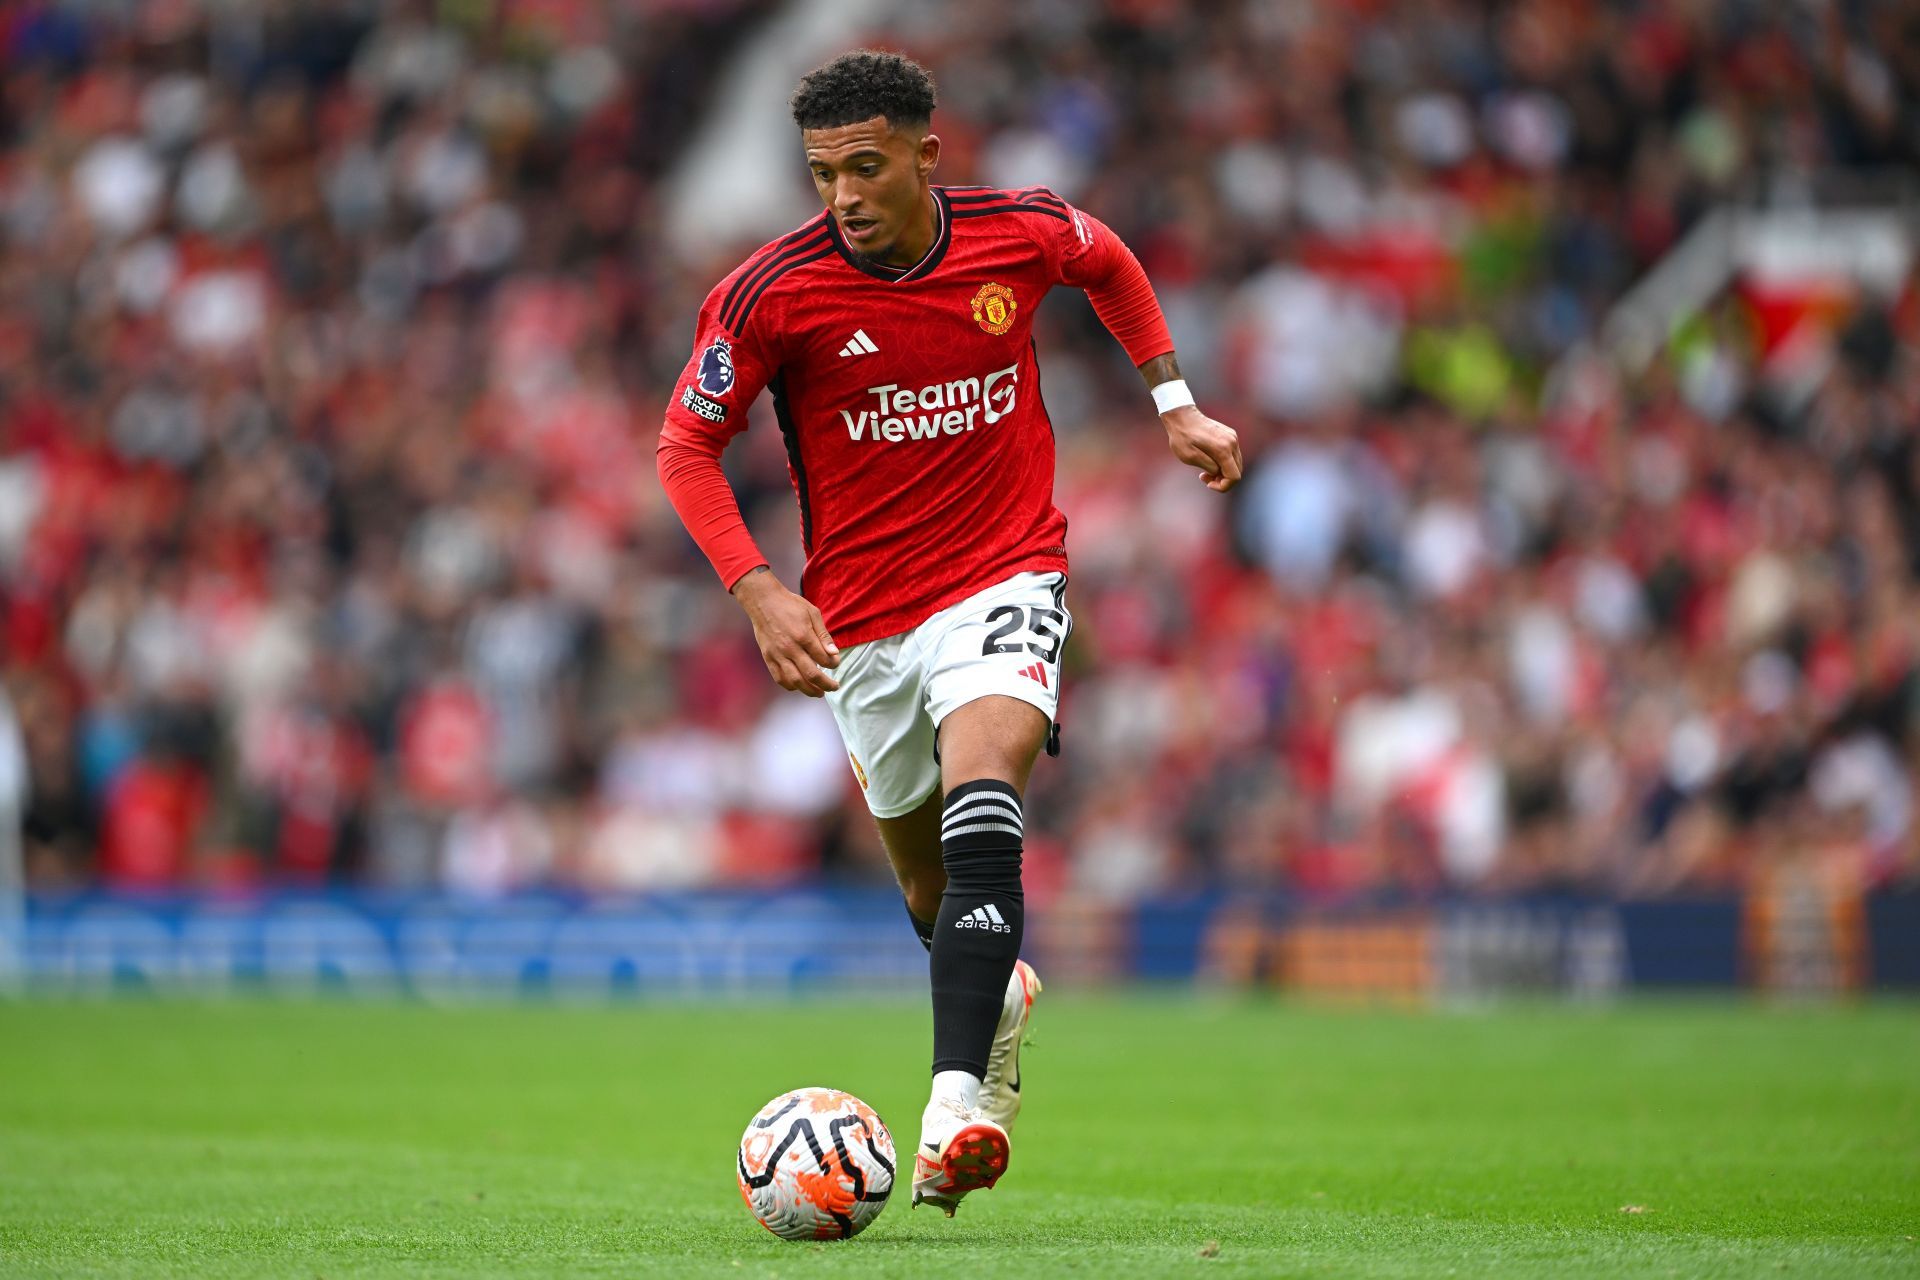 Jadon Sancho for Manchester United (via Getty Images)